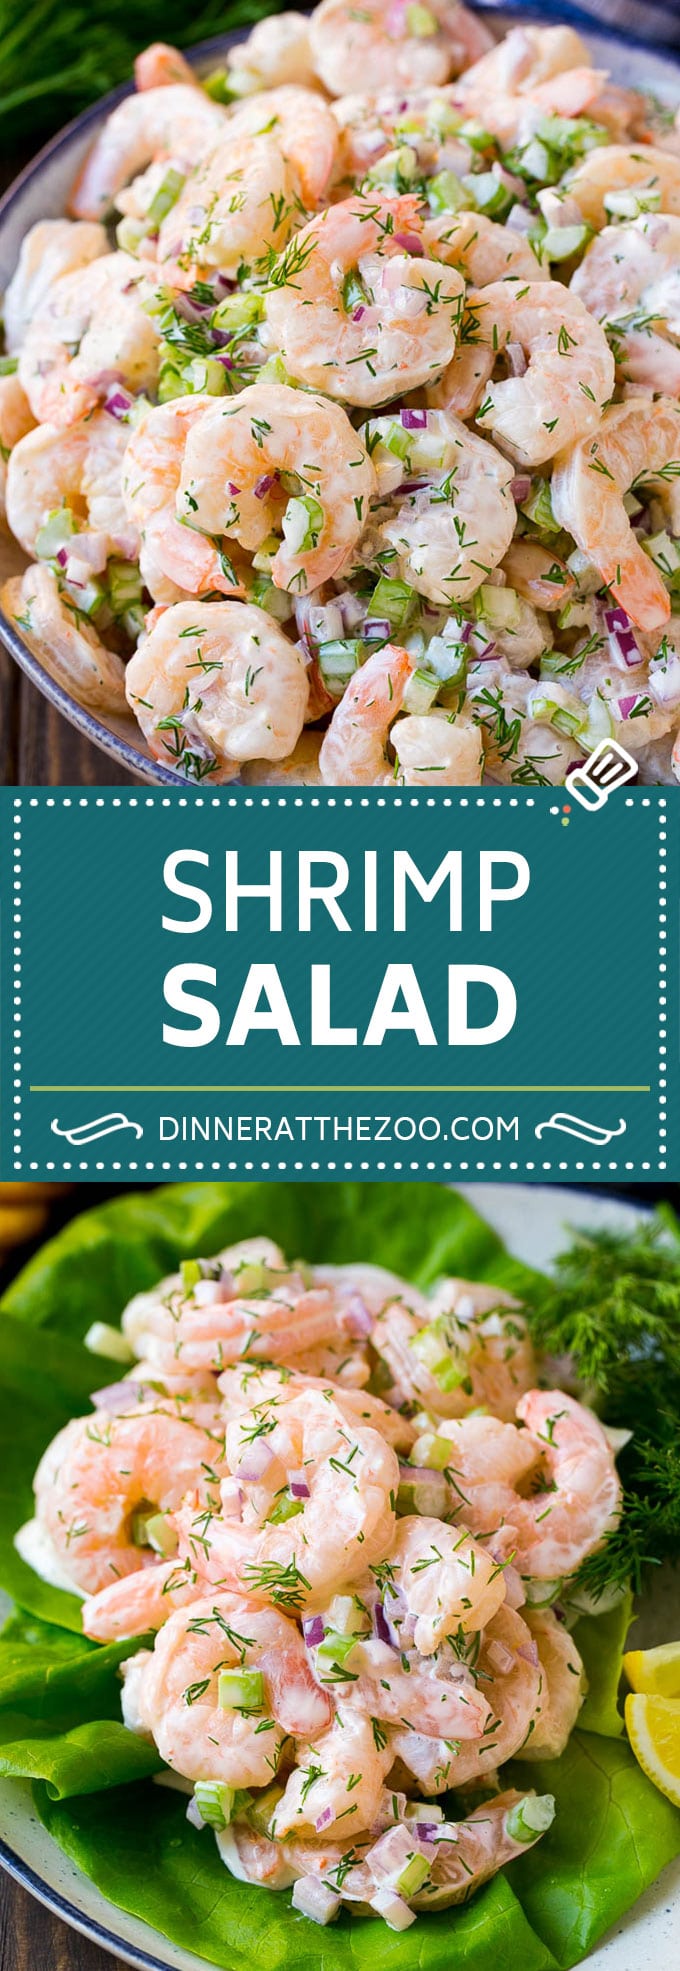 Shrimp Salad Recipe | Creamy Shrimp Salad #salad #shrimp #seafood #lowcarb #dinner #lunch #dinneratthezoo